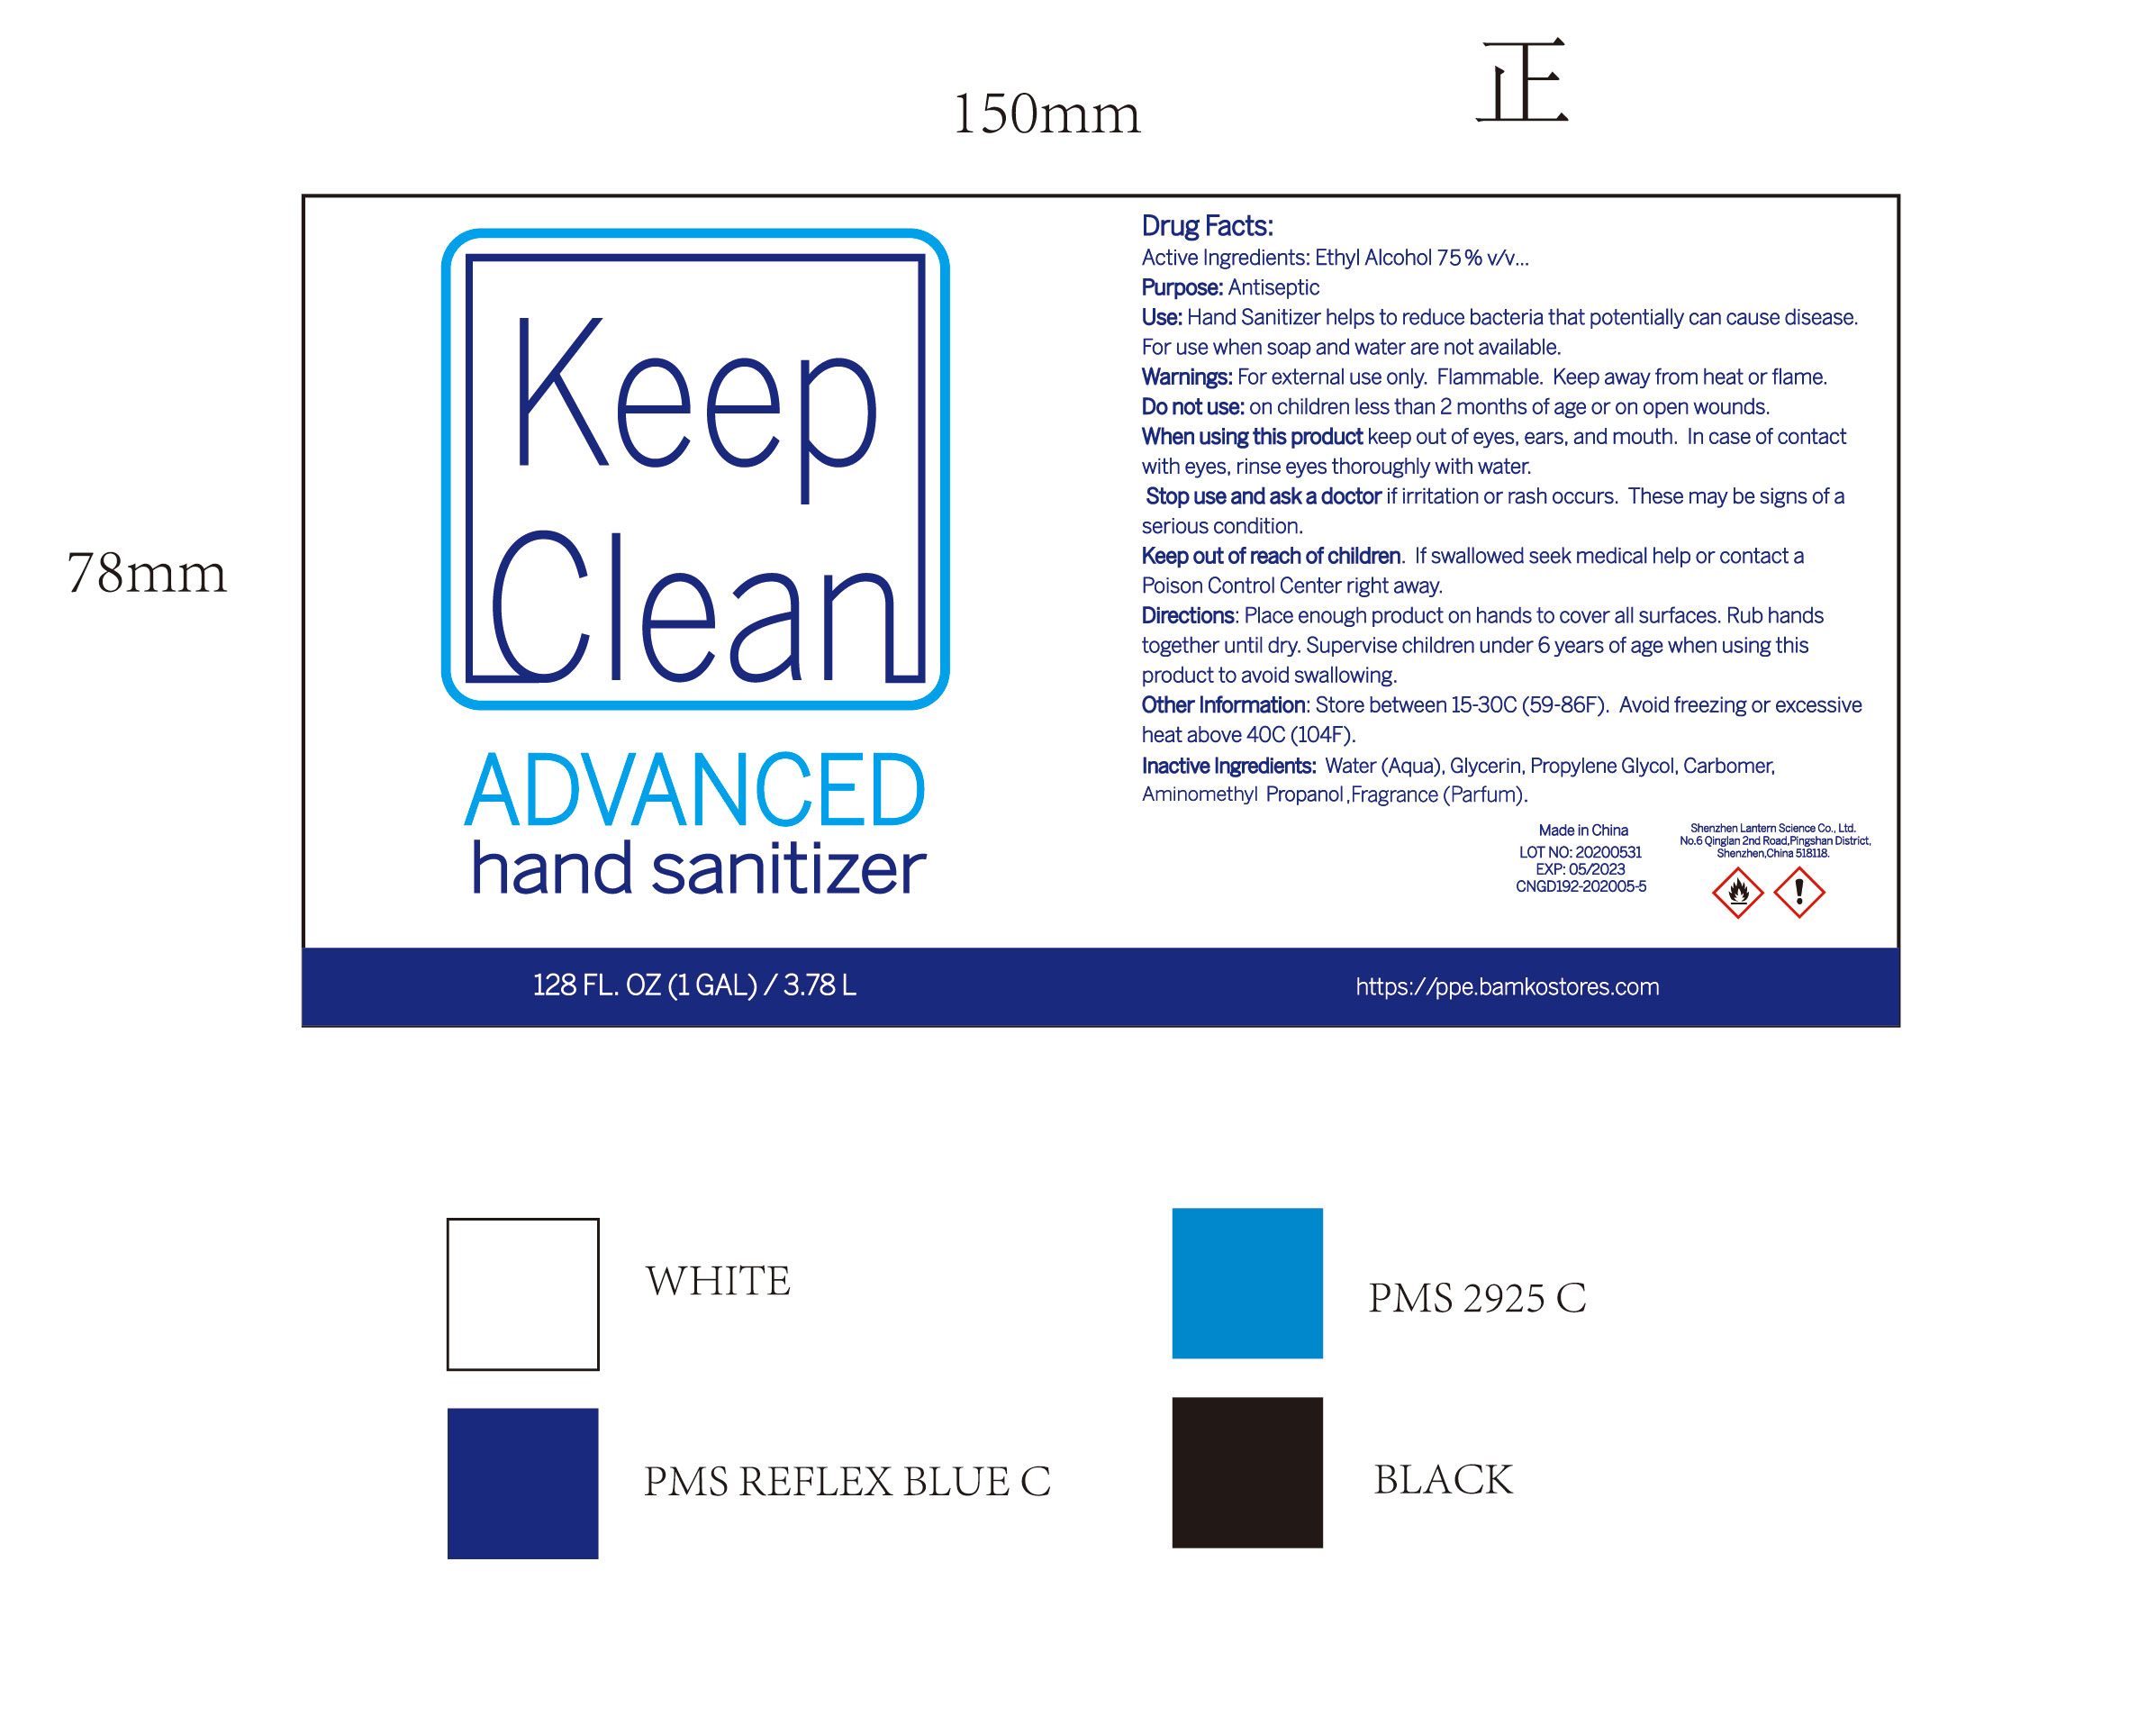  Keep Clean hand sanitizer 3.78L